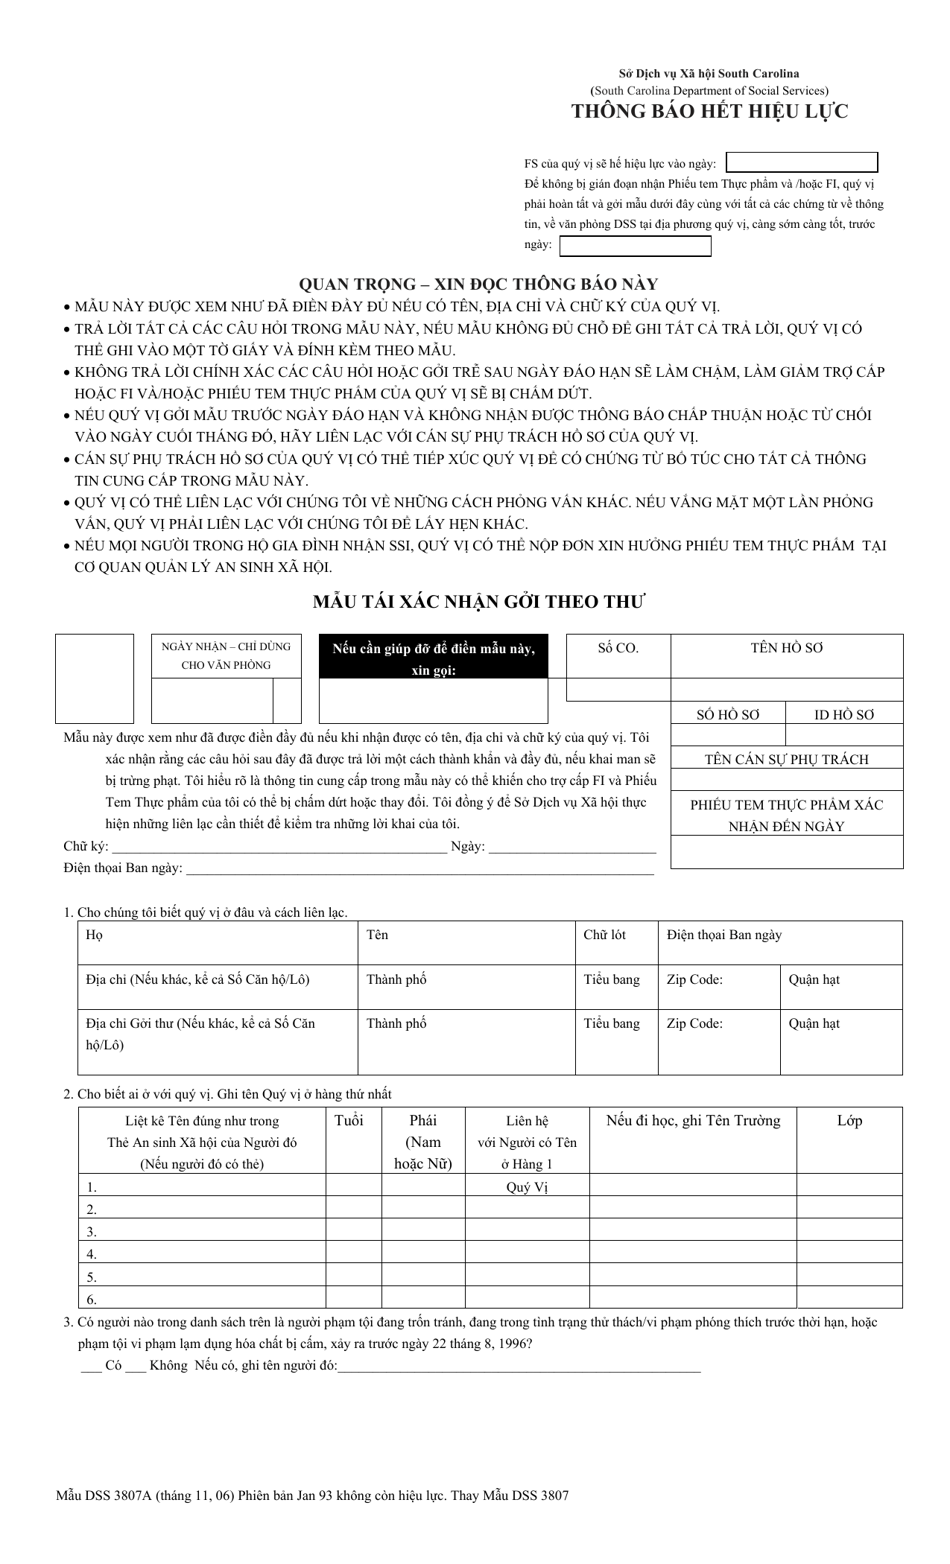 DSS Form 3807A VIET Notice of Expiration - South Carolina (Vietnamese), Page 1